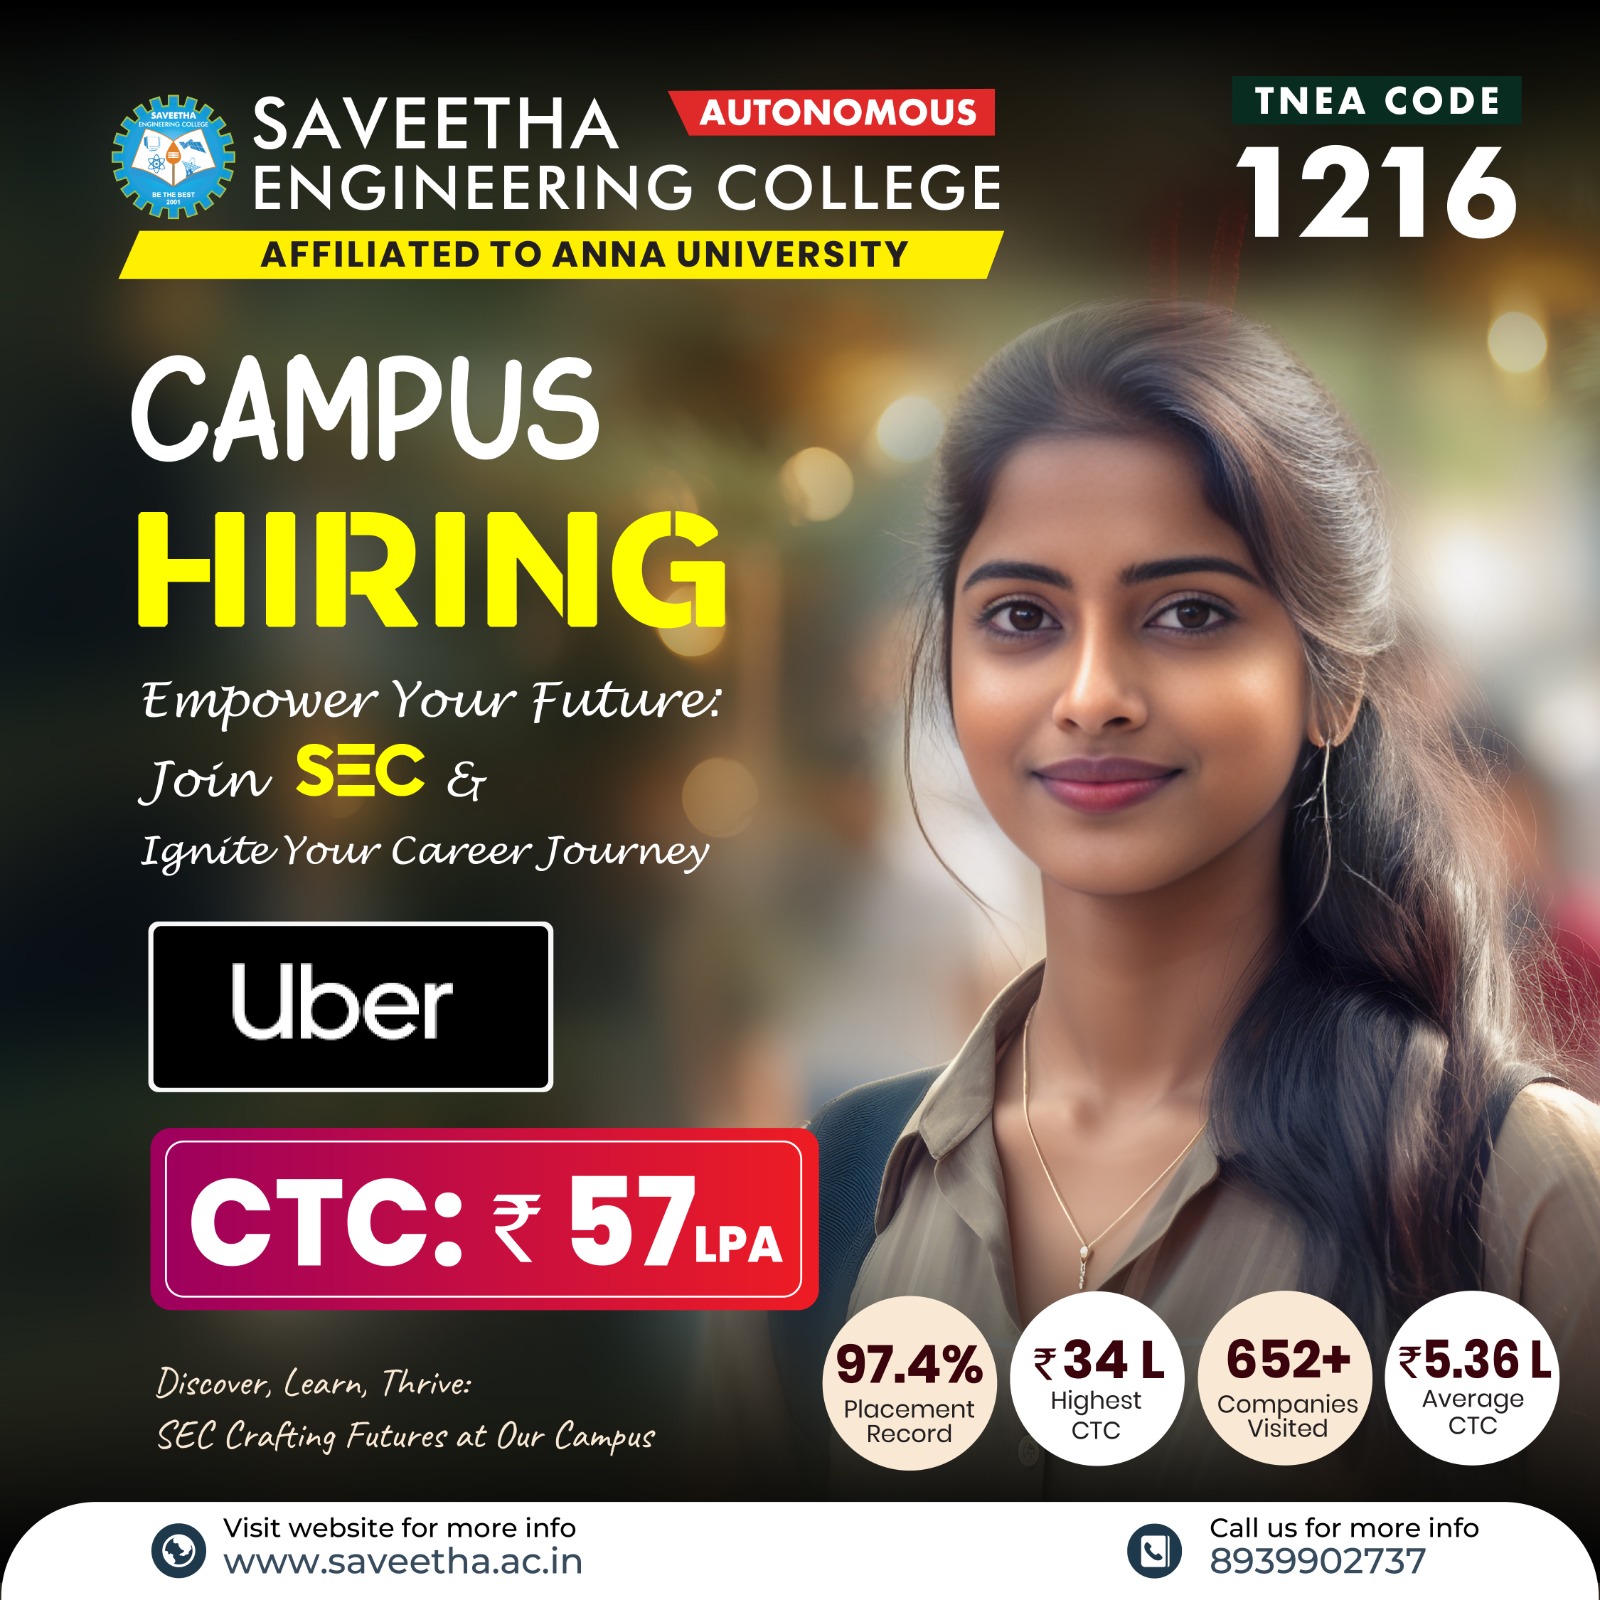 UBER Campus Hiring at Saveetha Engineering College